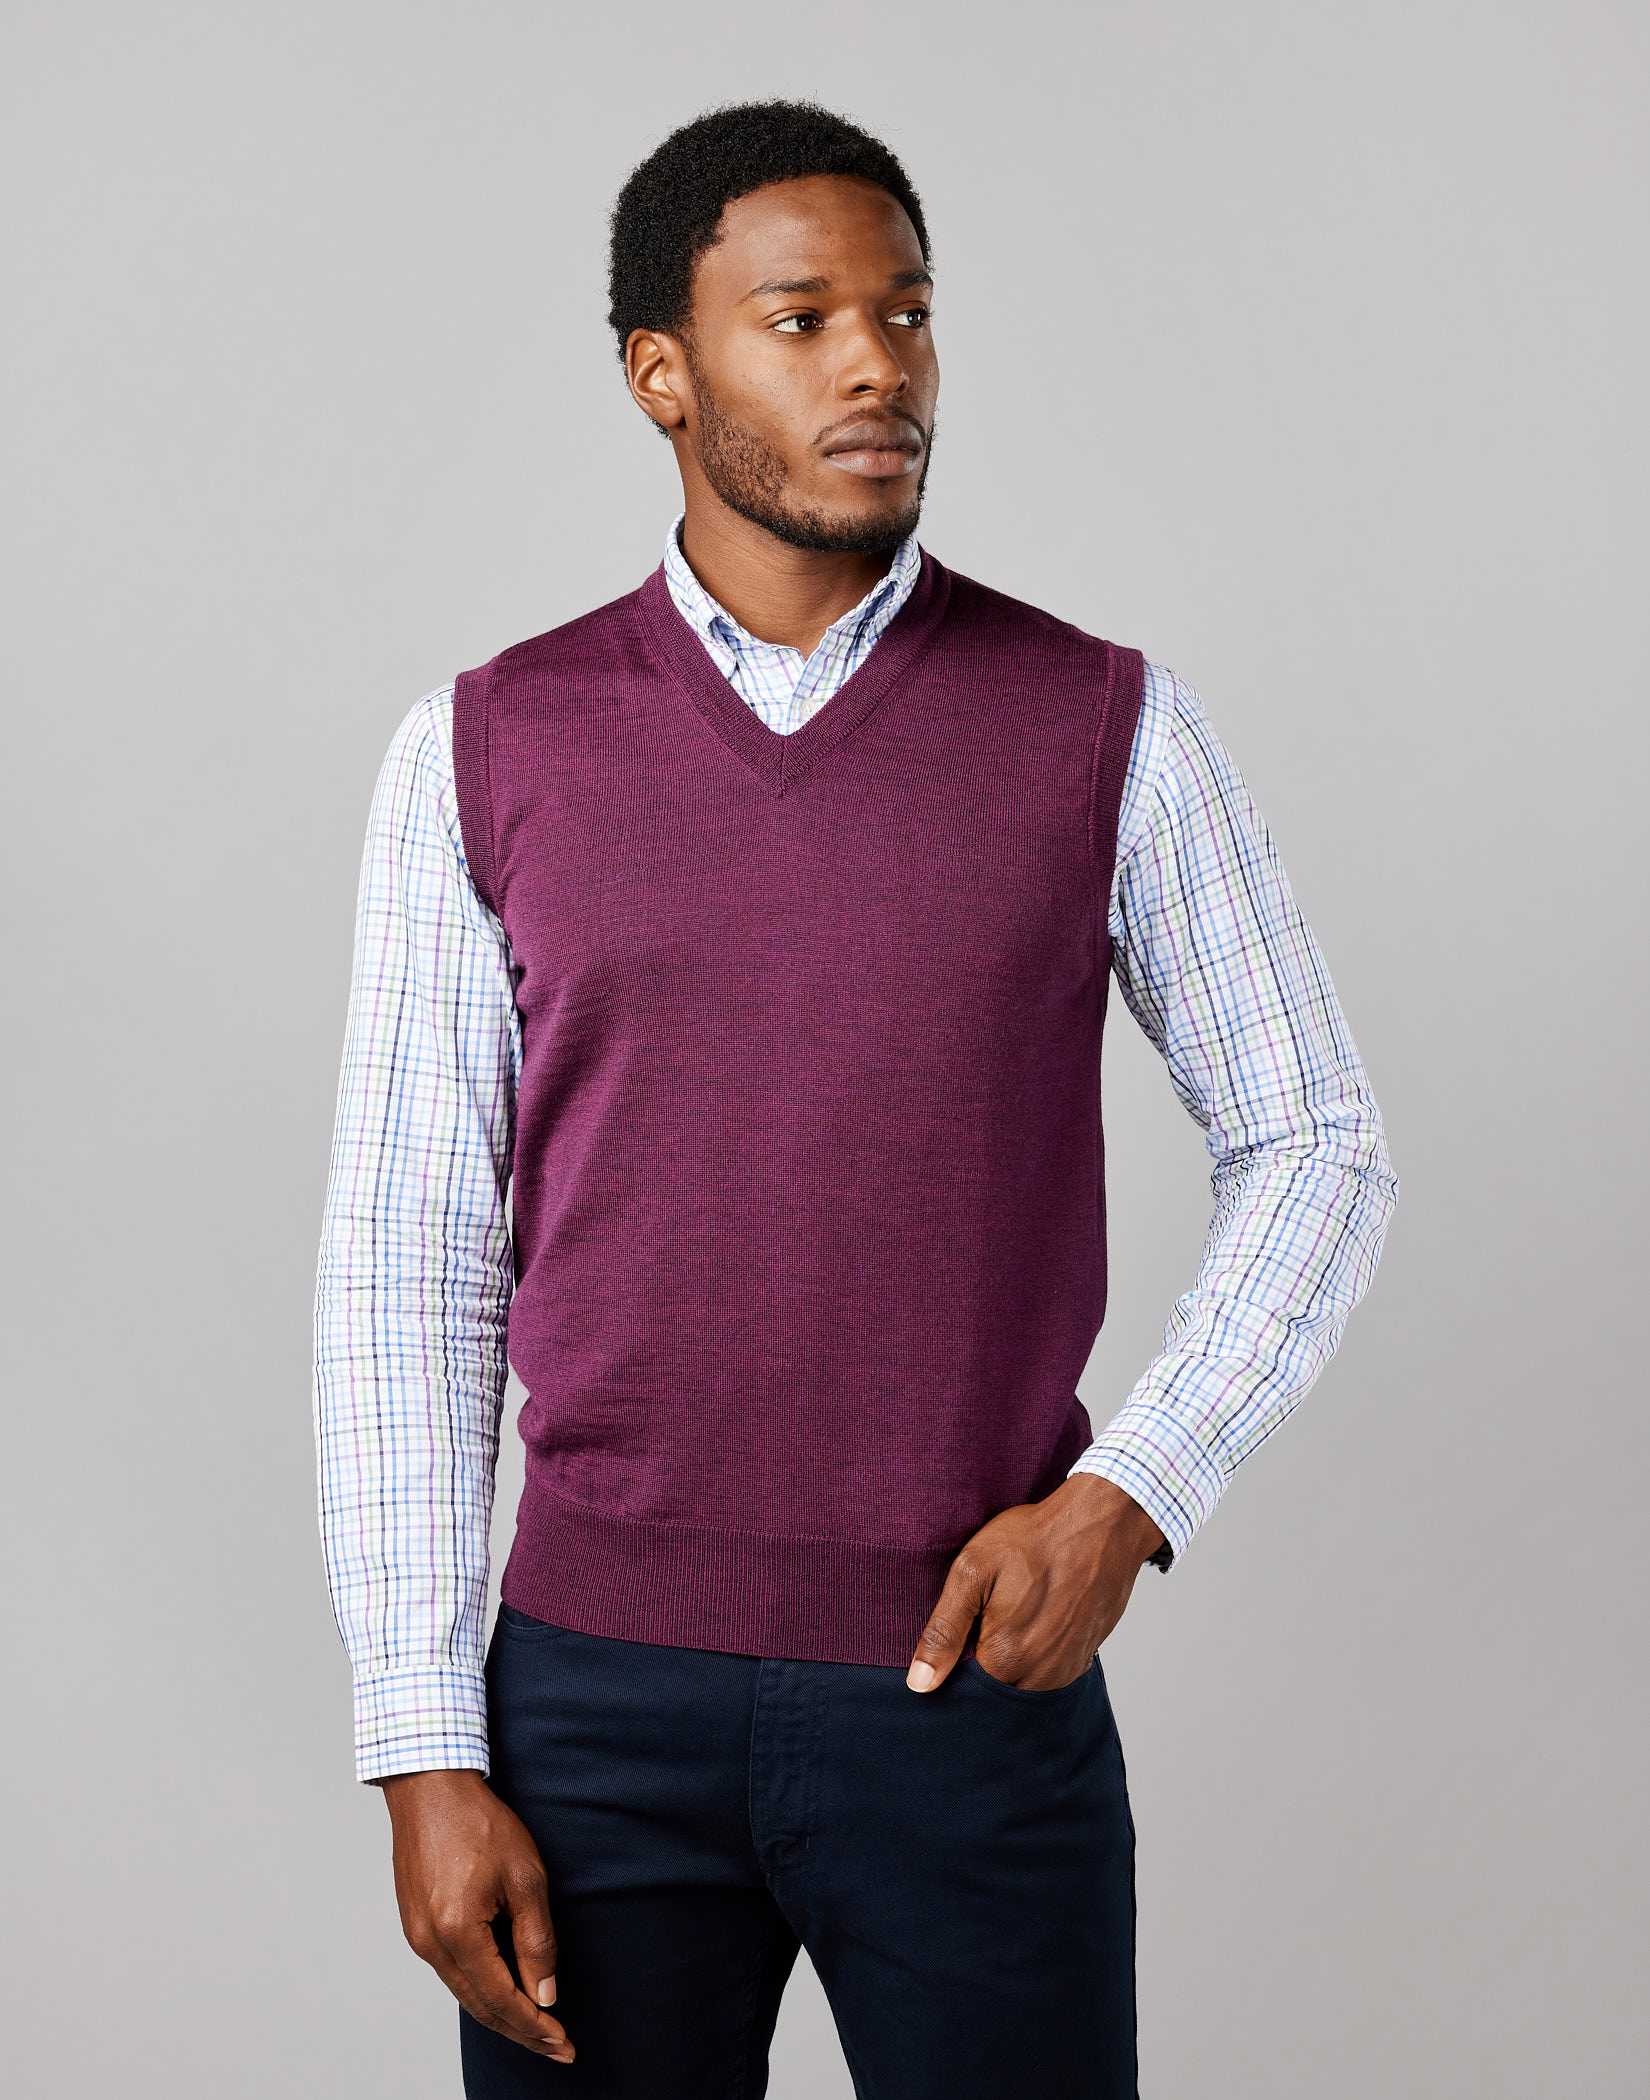 Men's Knitwear: Merino Wool, Cotton, Lambswool & More | Joseph Turner